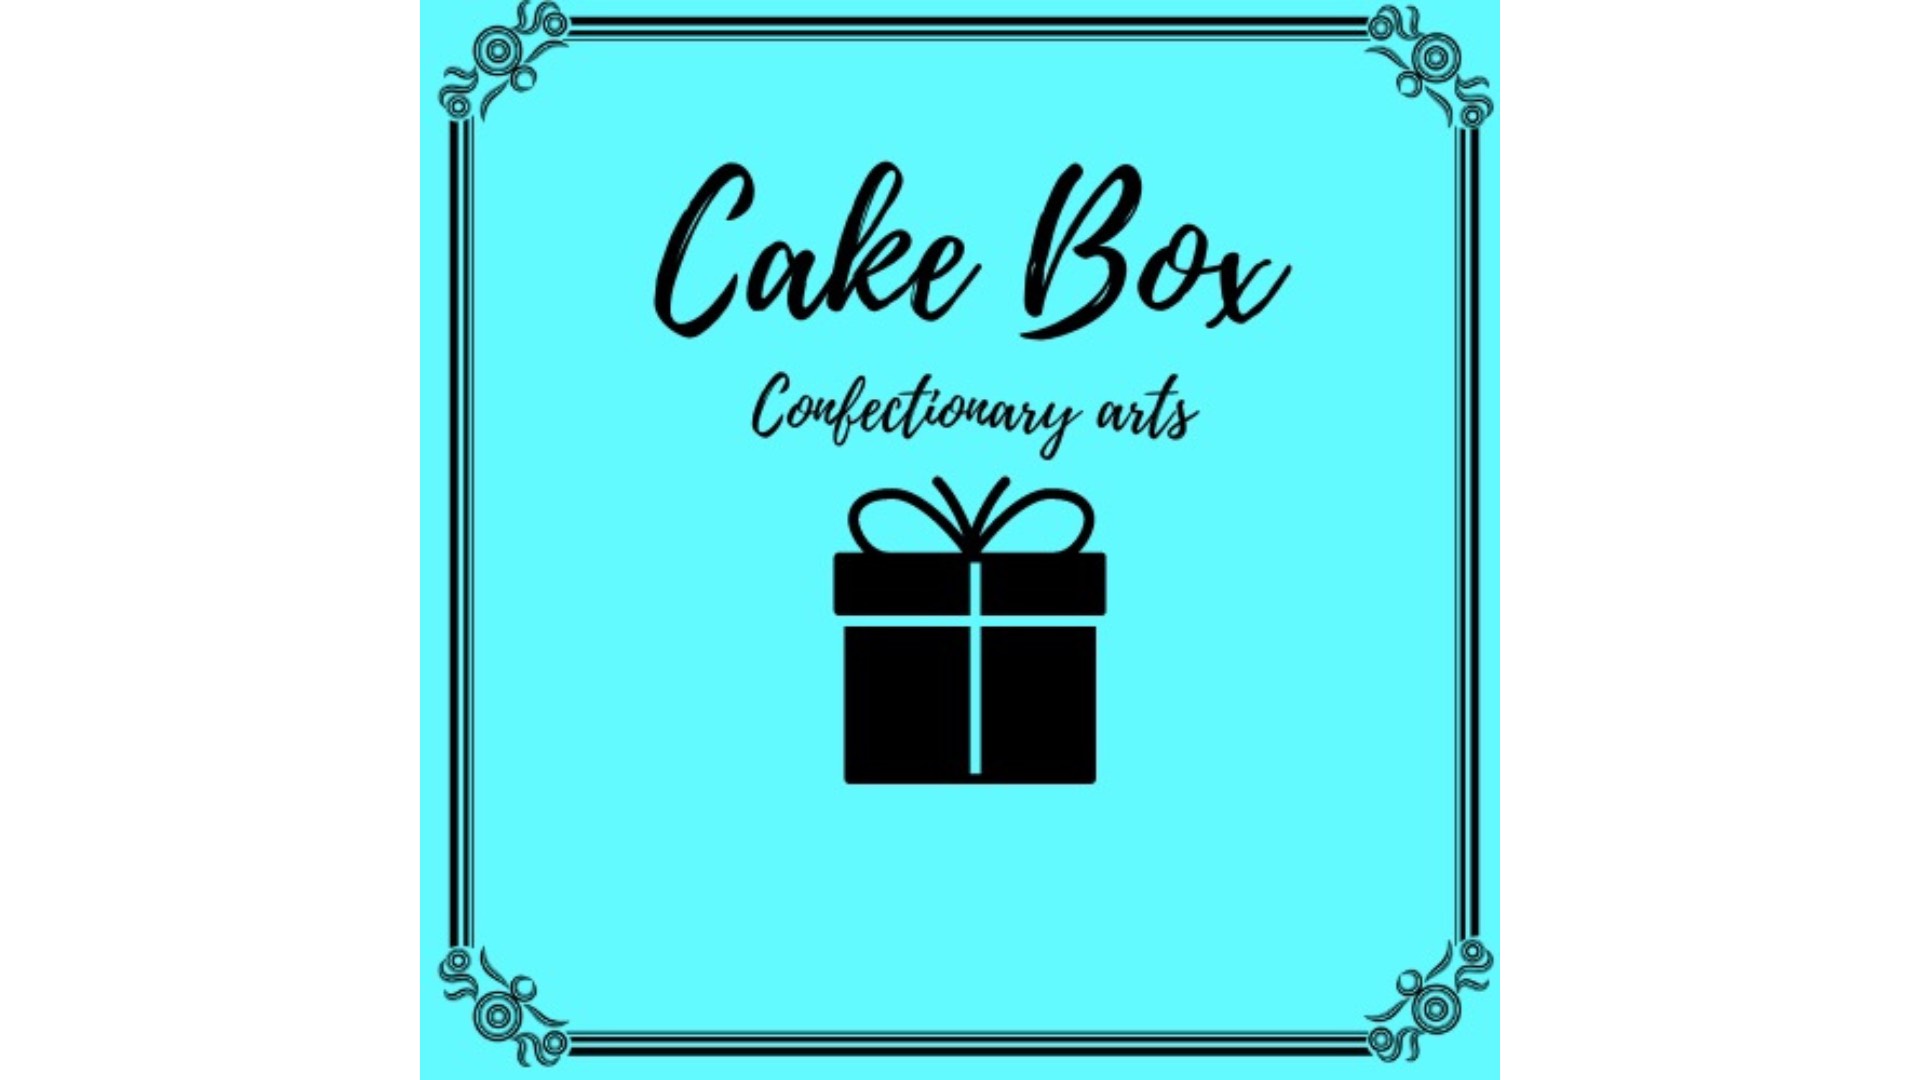 Cake Box